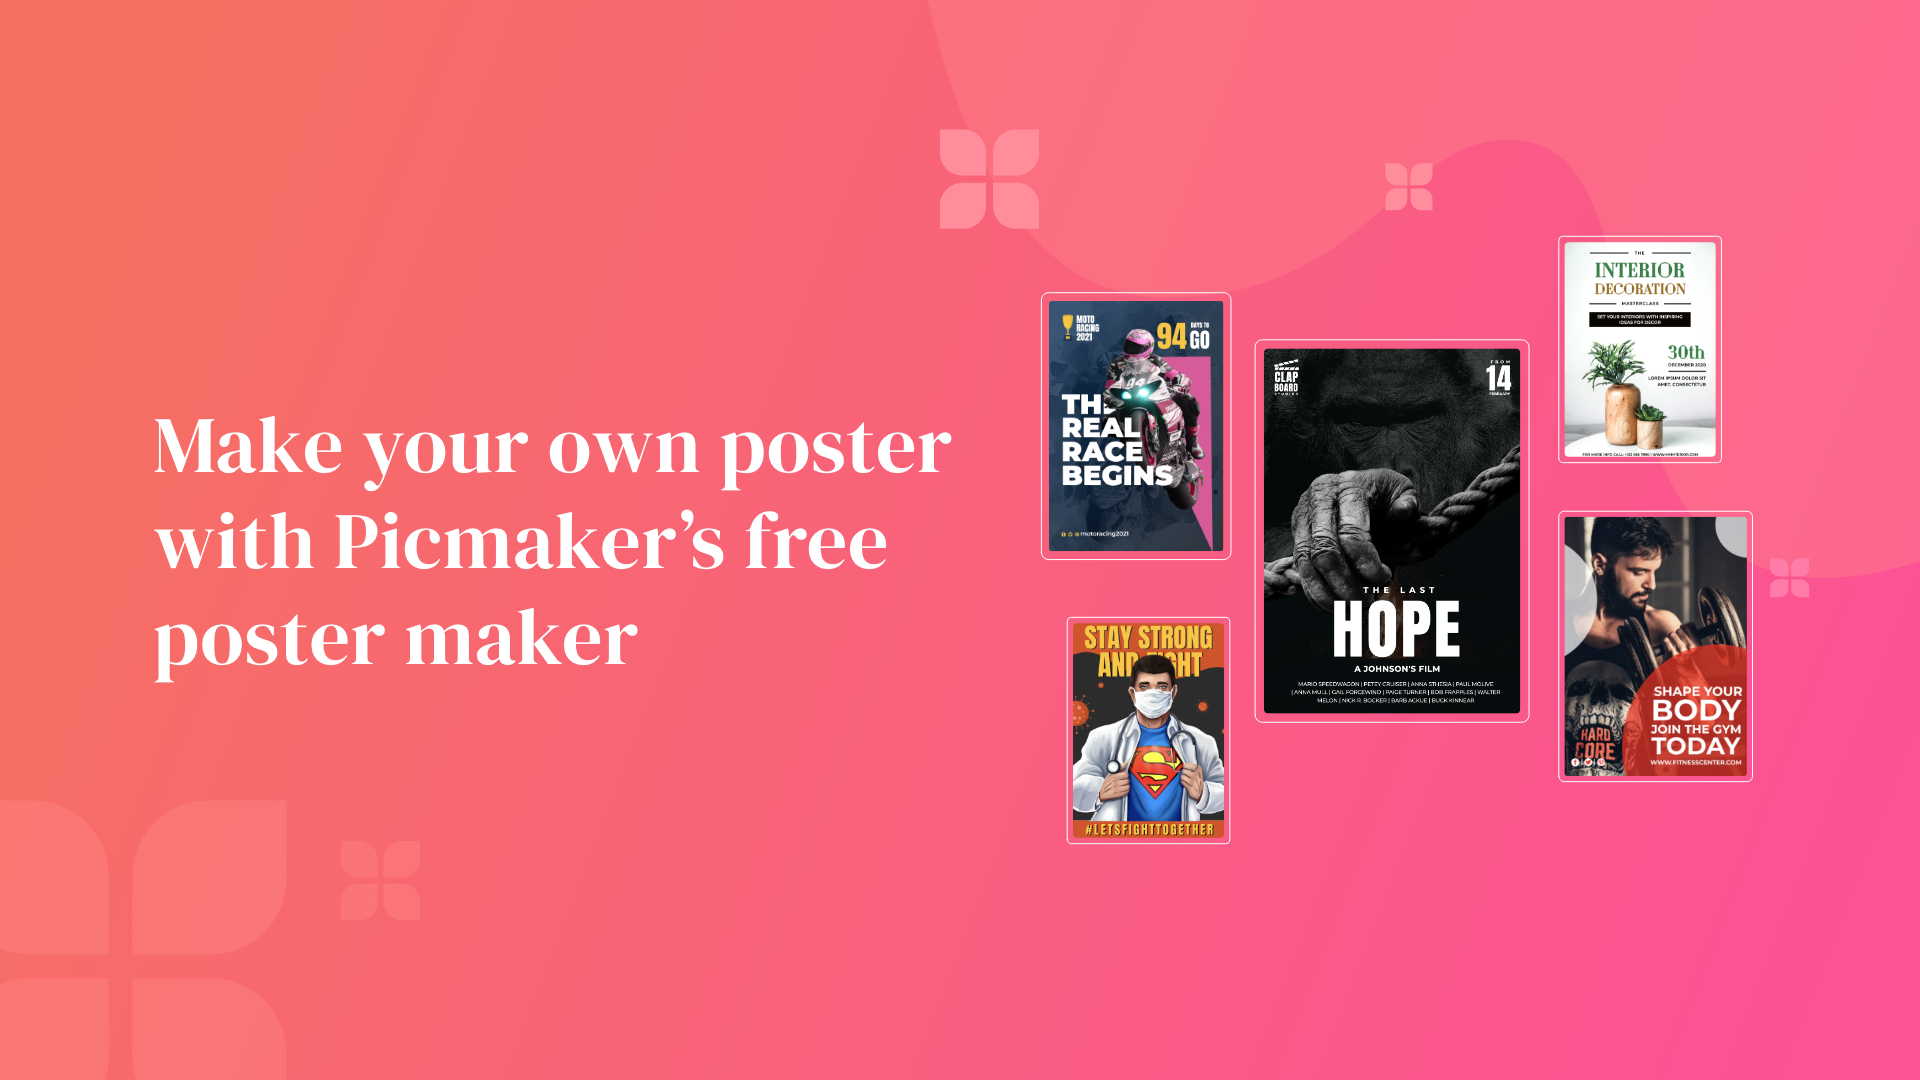 Free Online Block Poster Maker (GUIDE & FAQ)